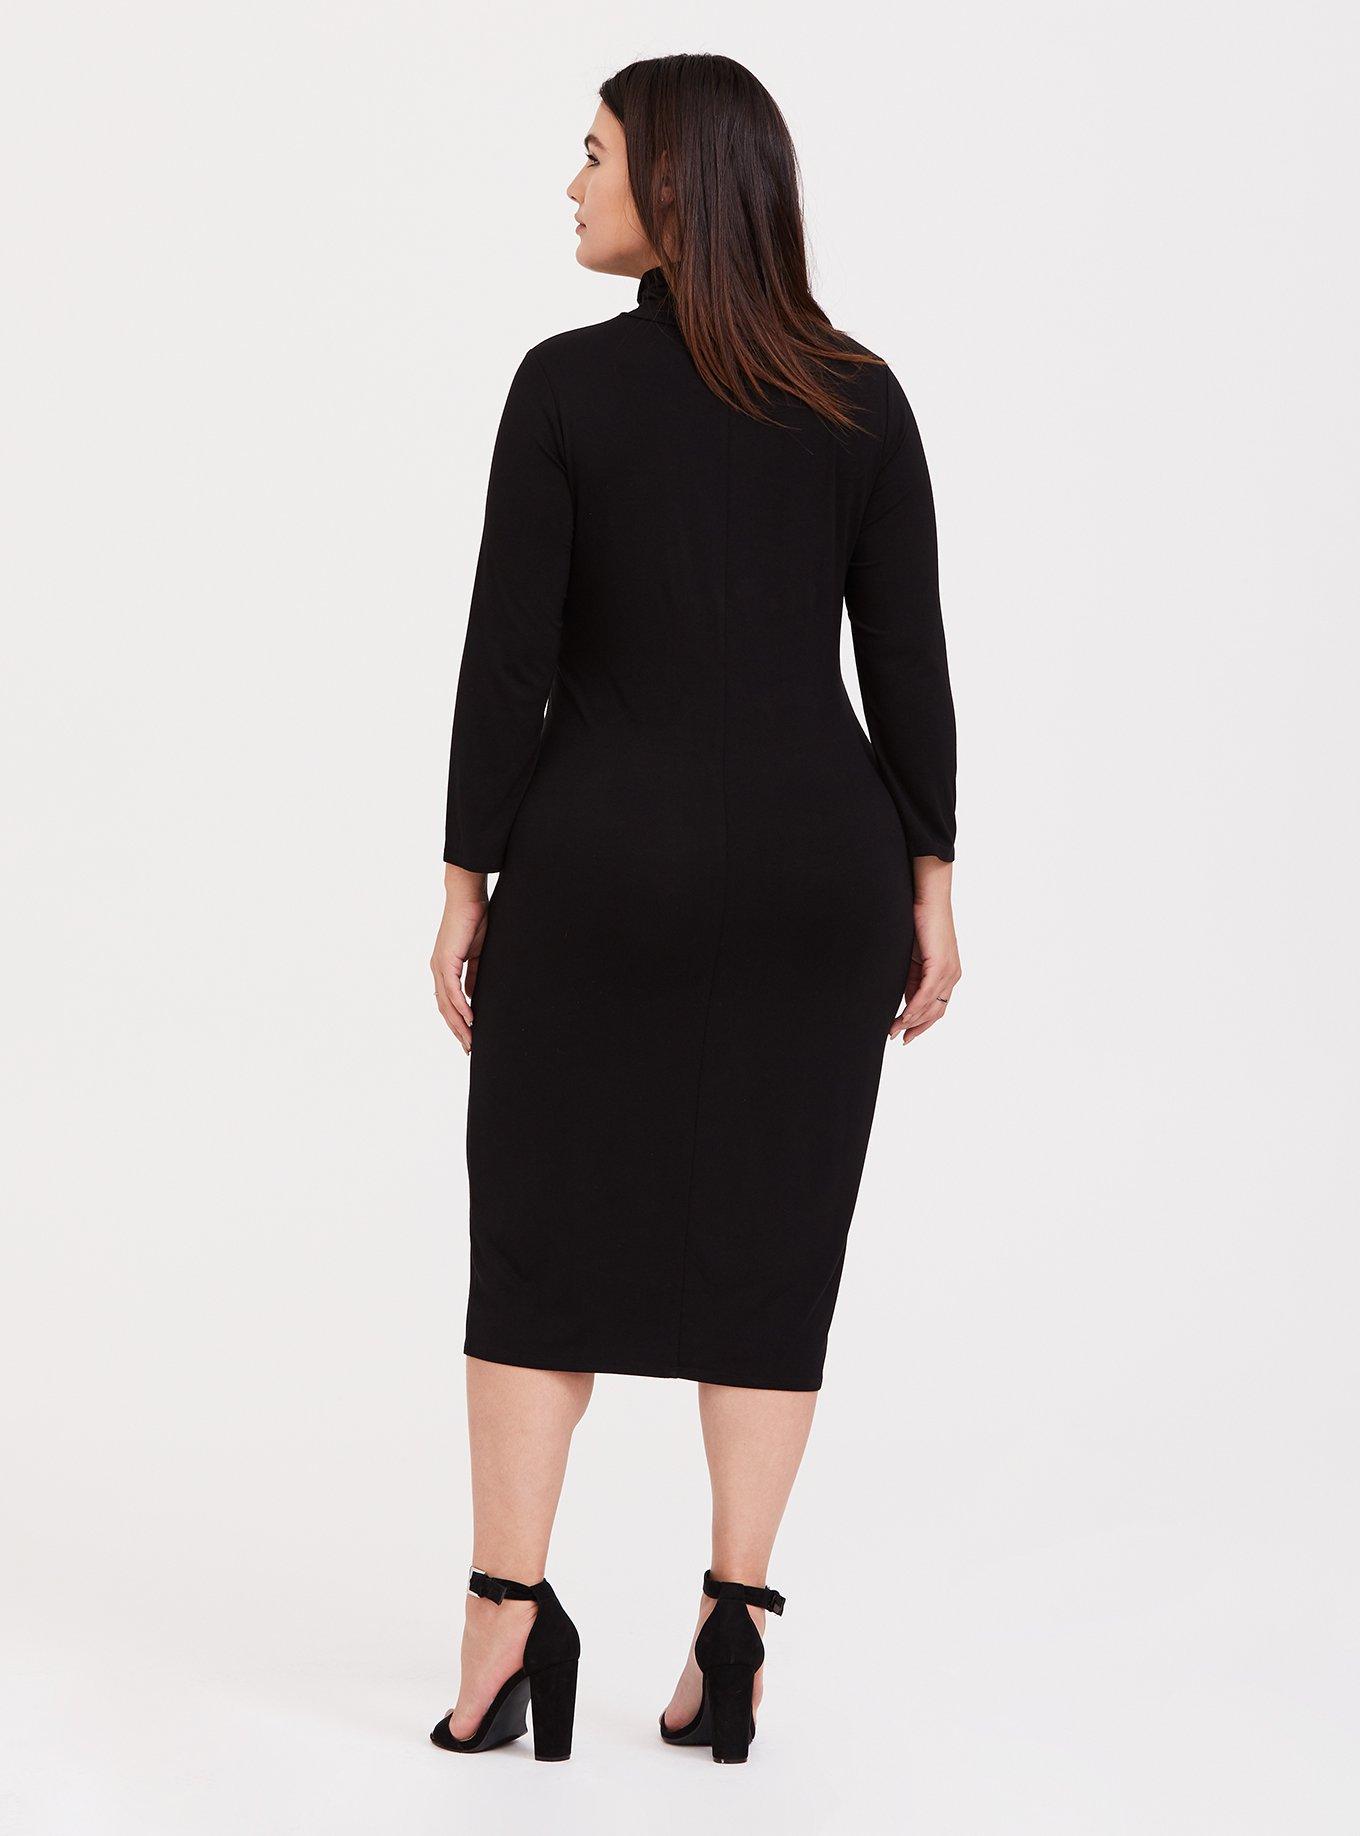 Plus Size - Black Jersey Turtleneck Bodycon Midi Dress - Torrid